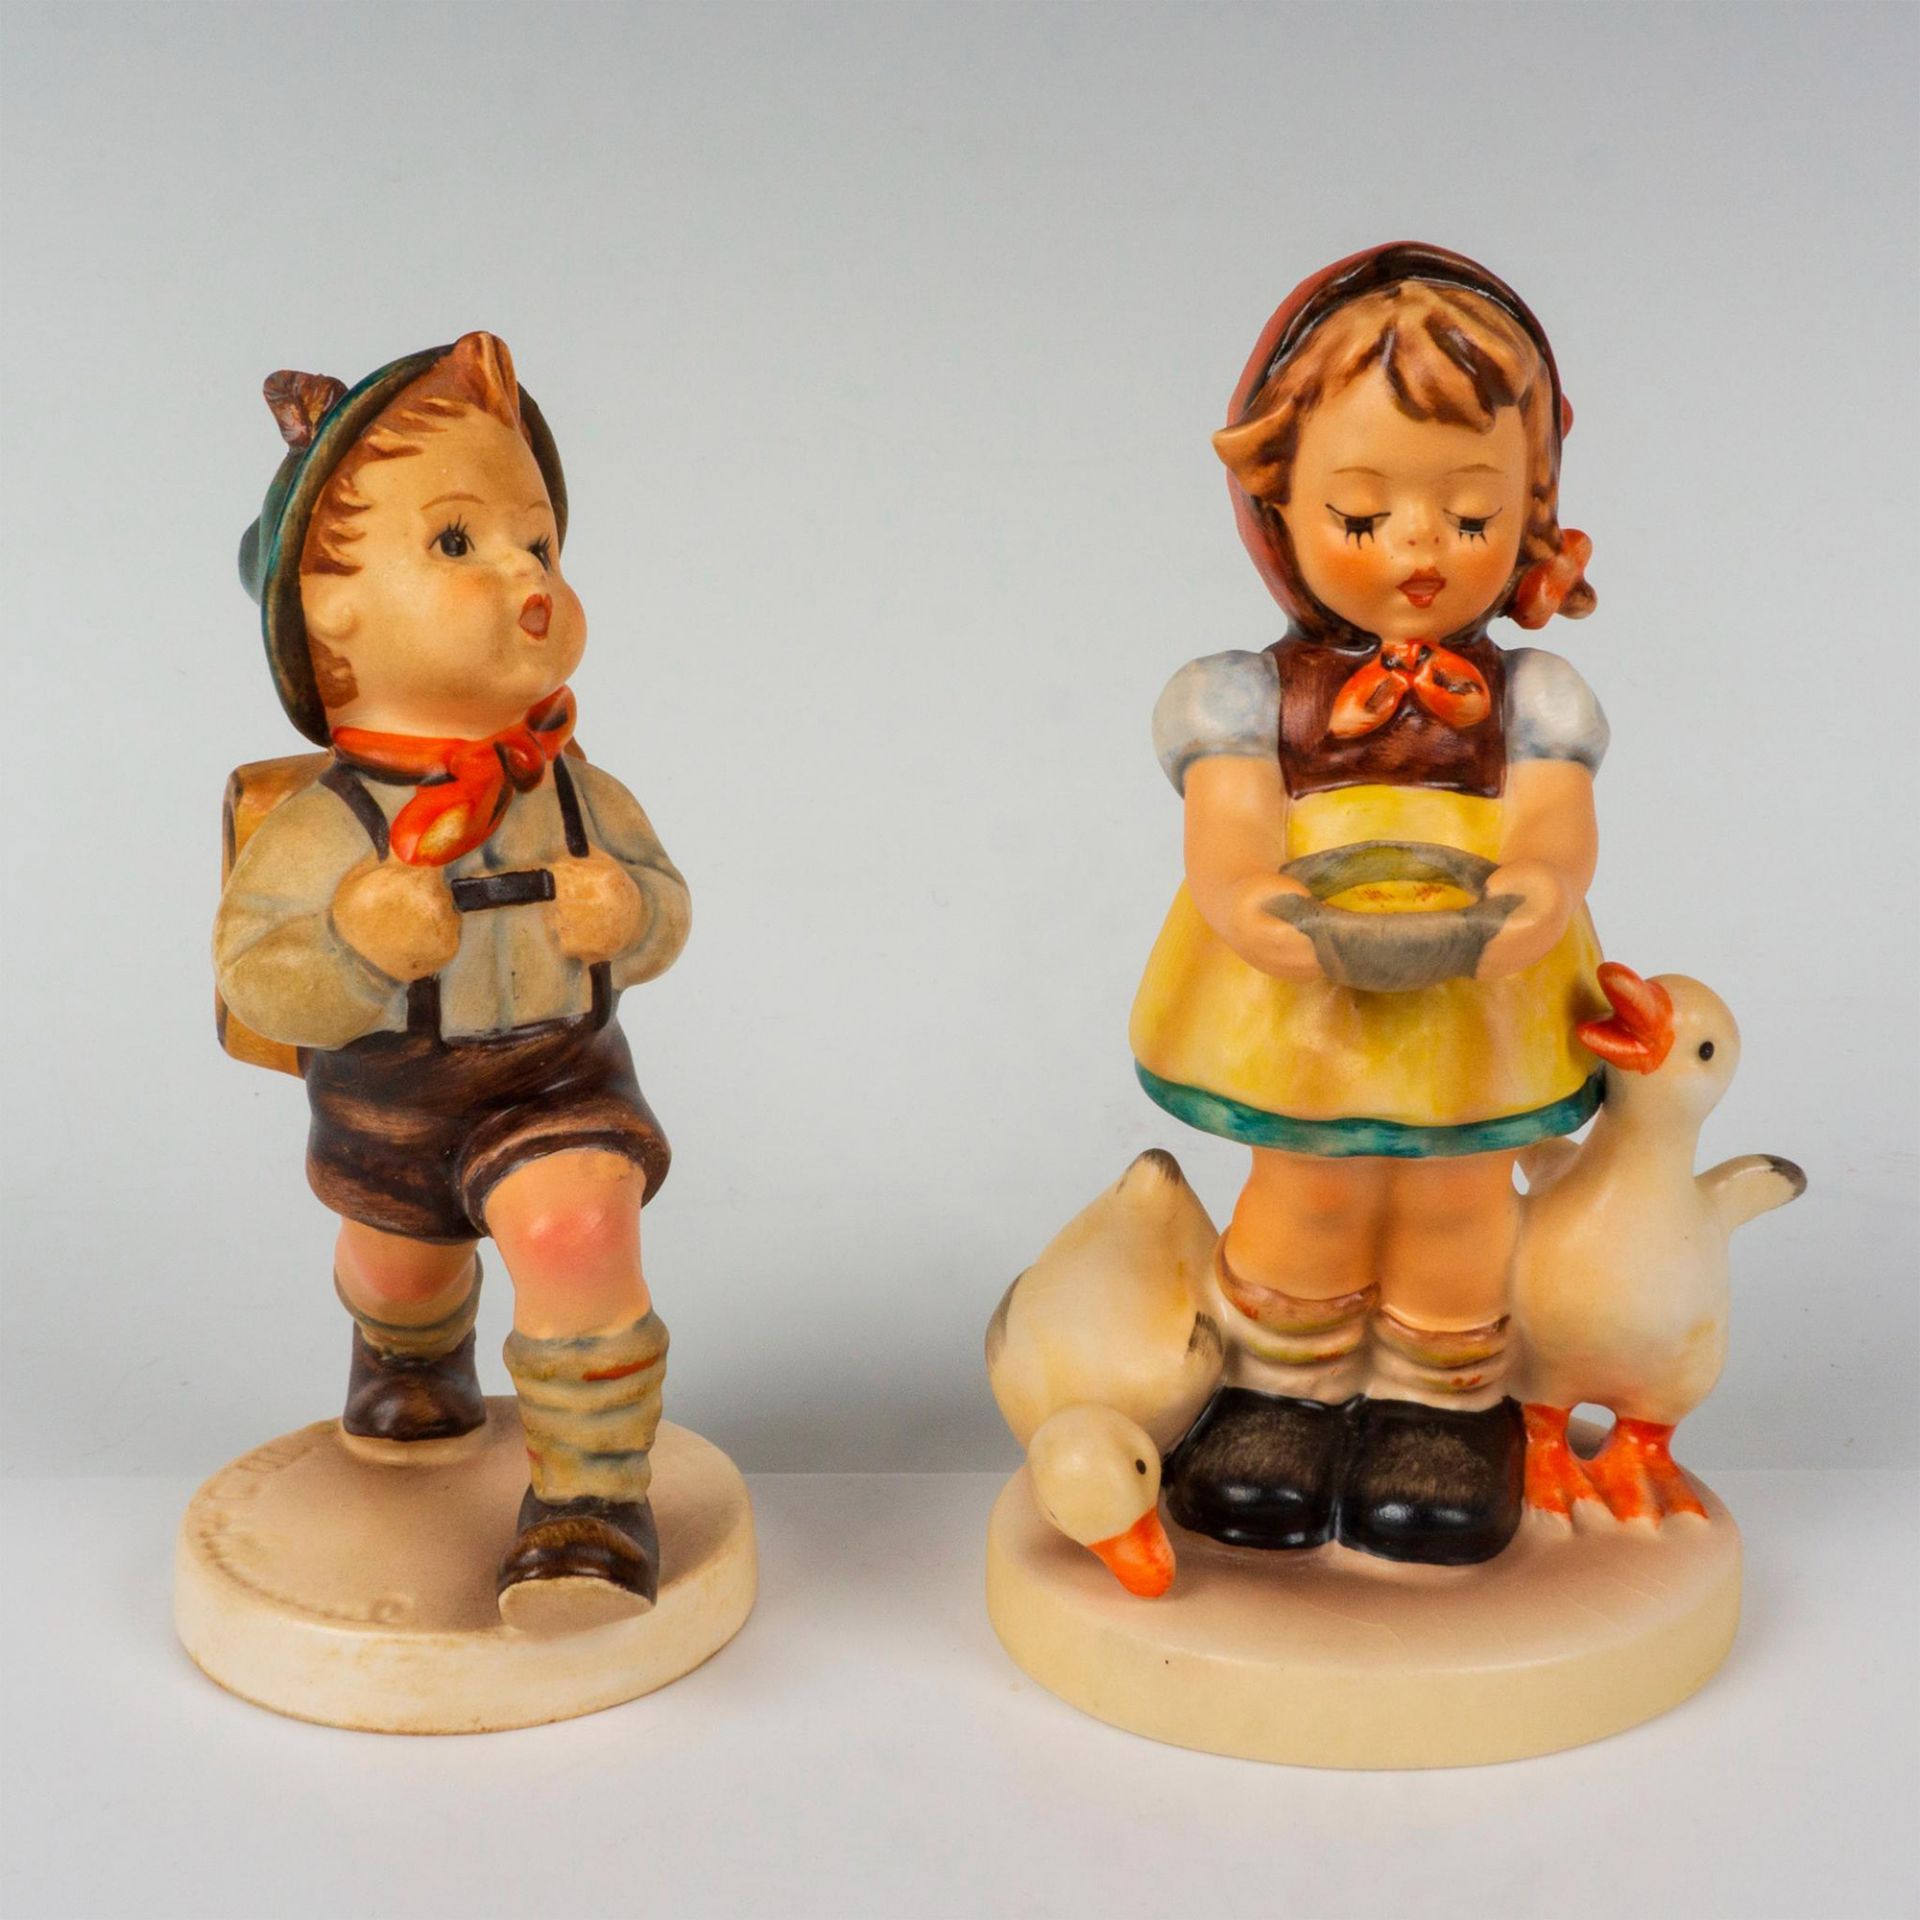 2pc Goebel Hummel Figurines